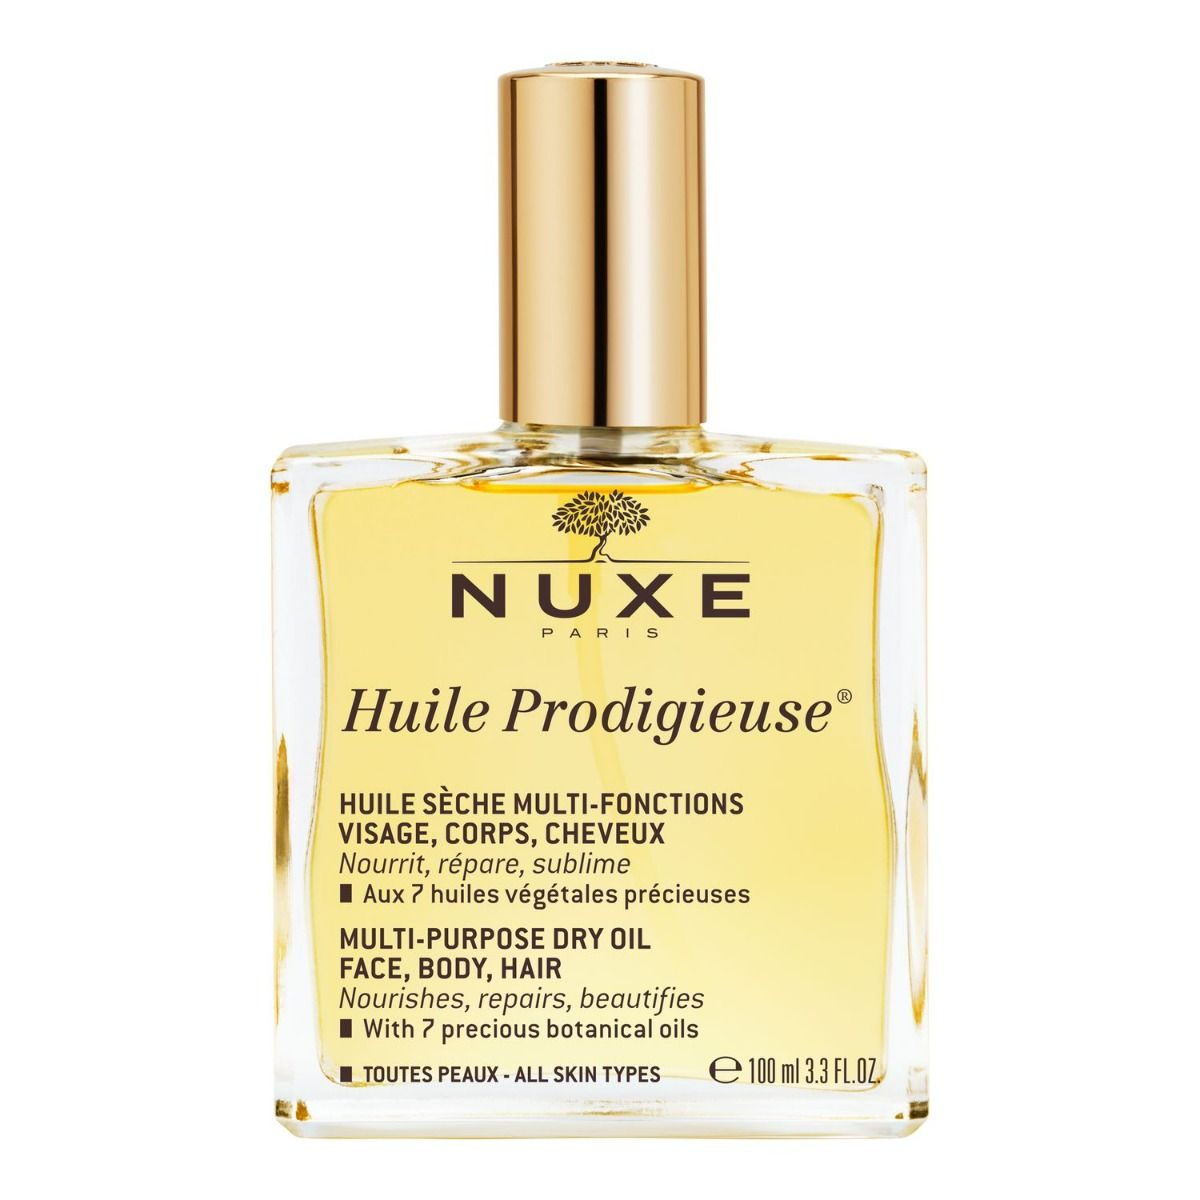 Nuxe Huile Prodigieuse масло для лица, тела и волос, 100 ml